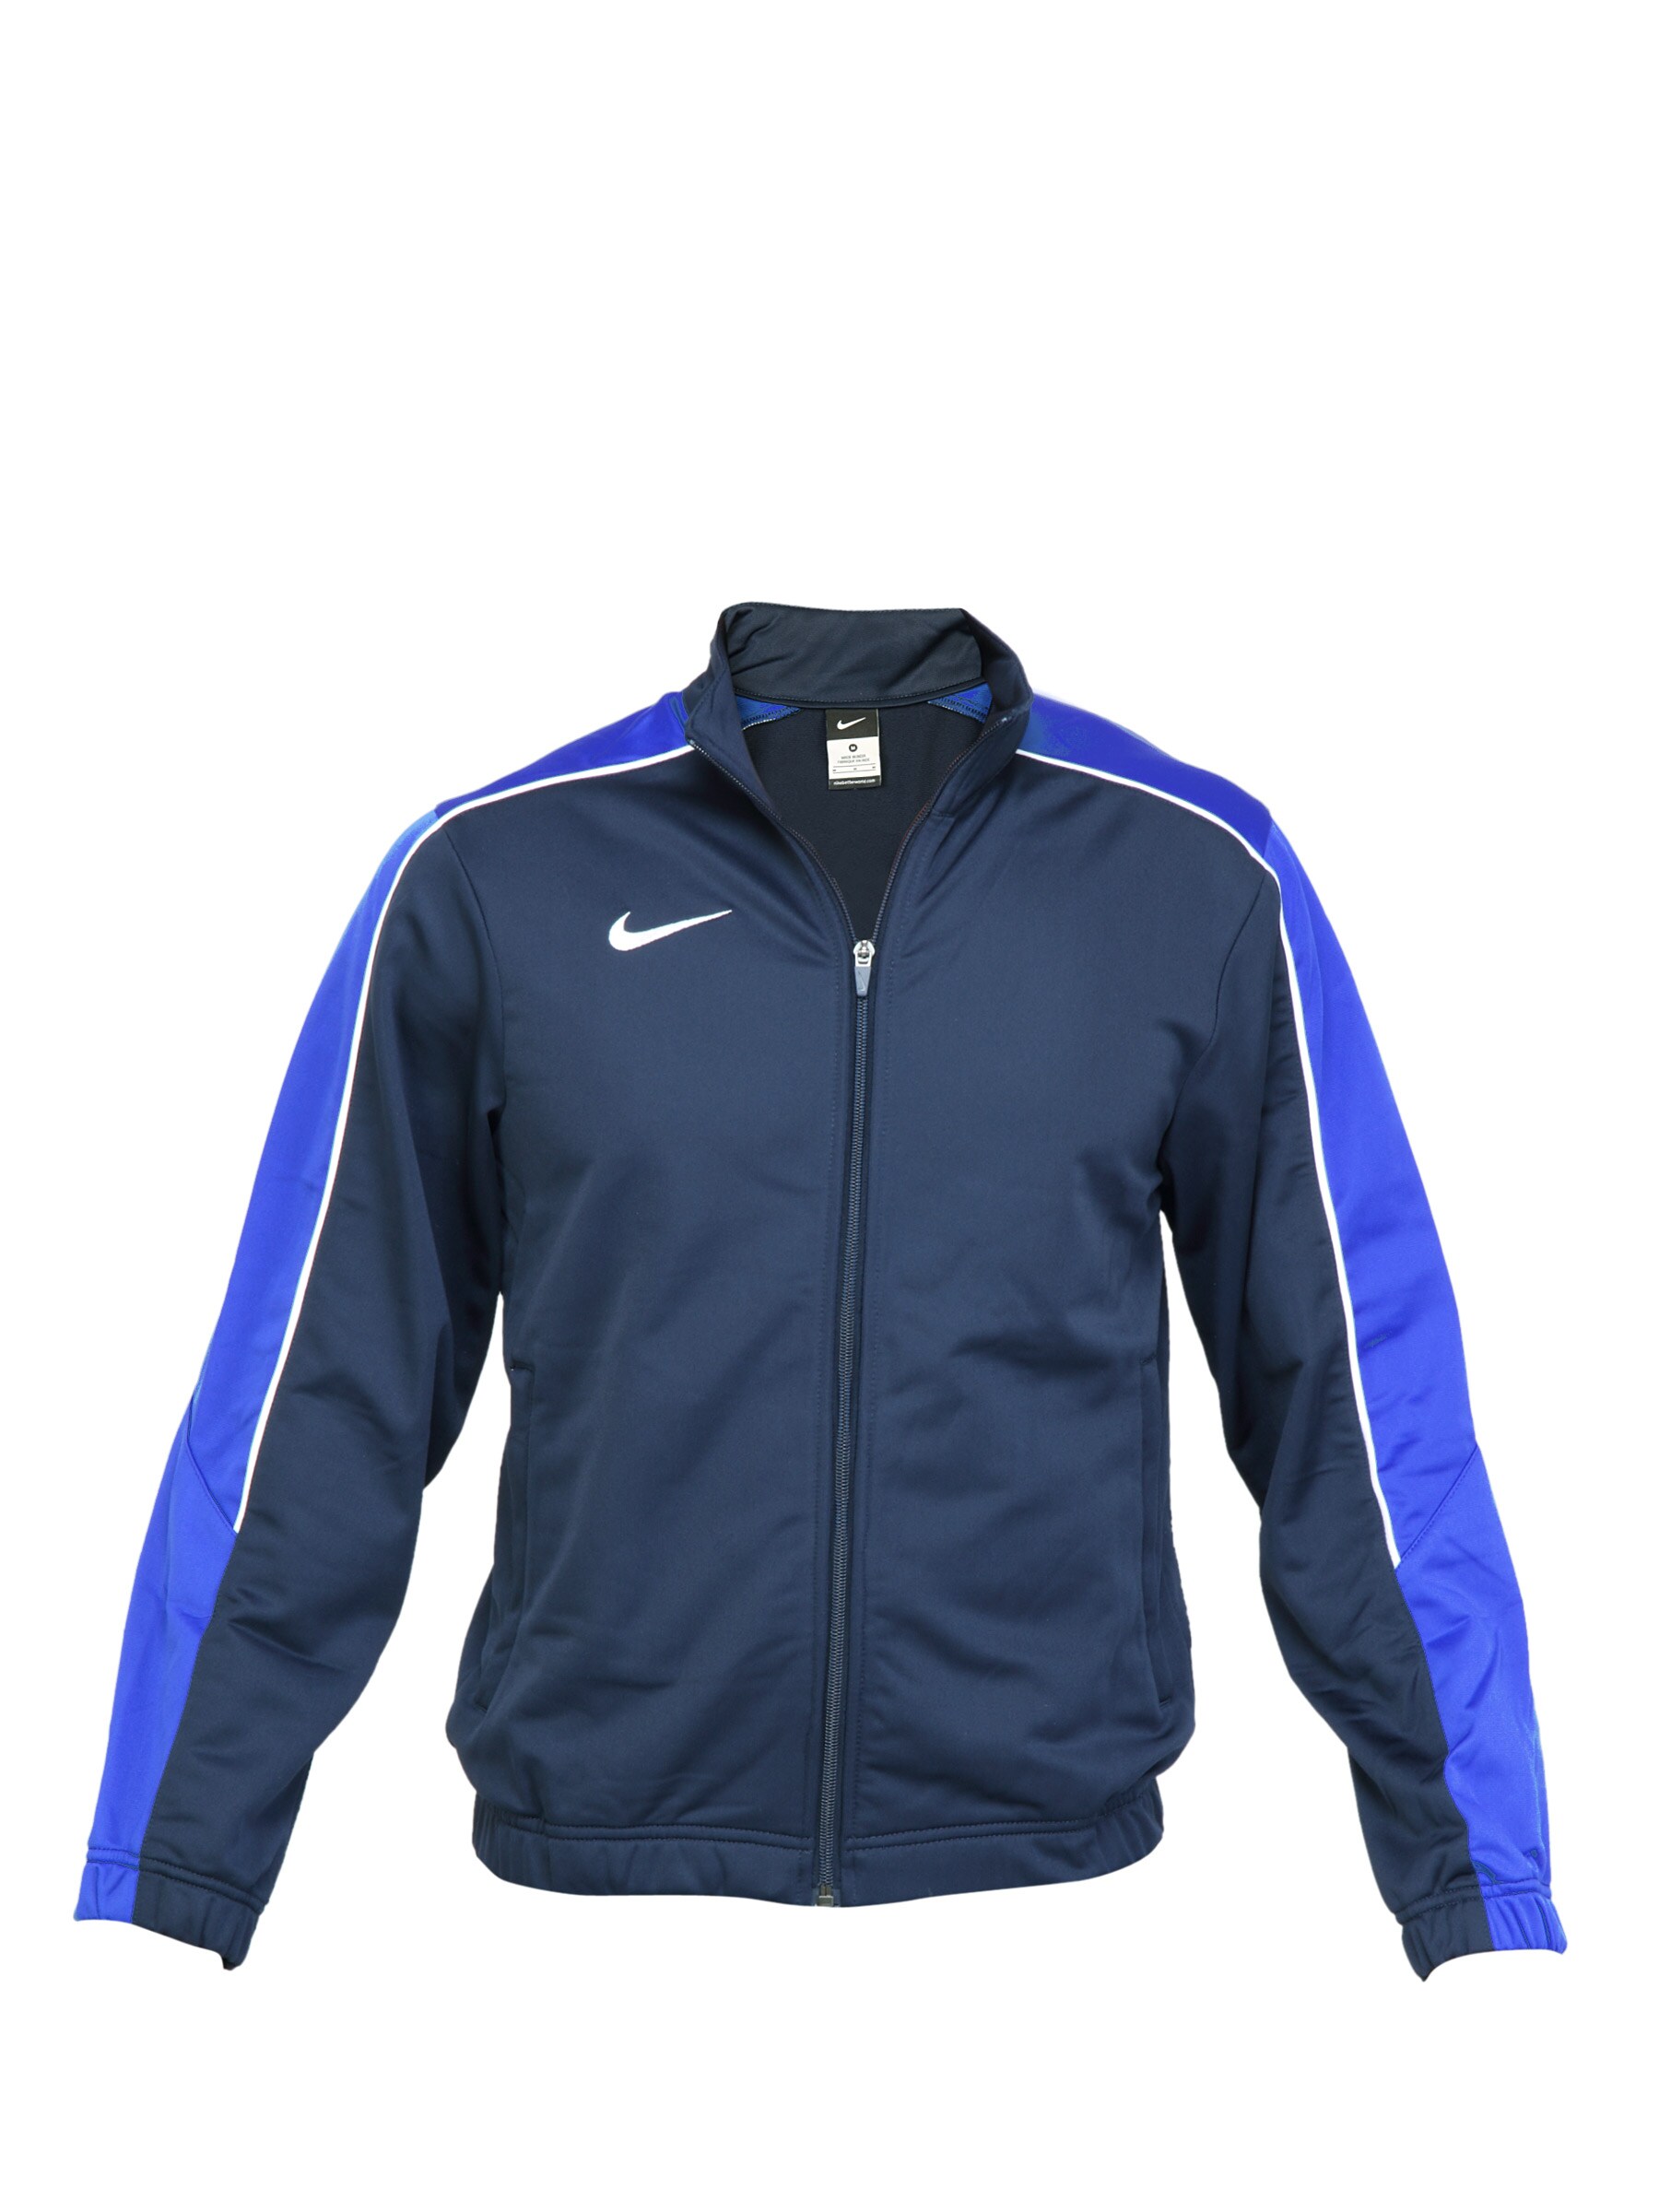 Nike Men Football Soccer Navy Blue Jackets